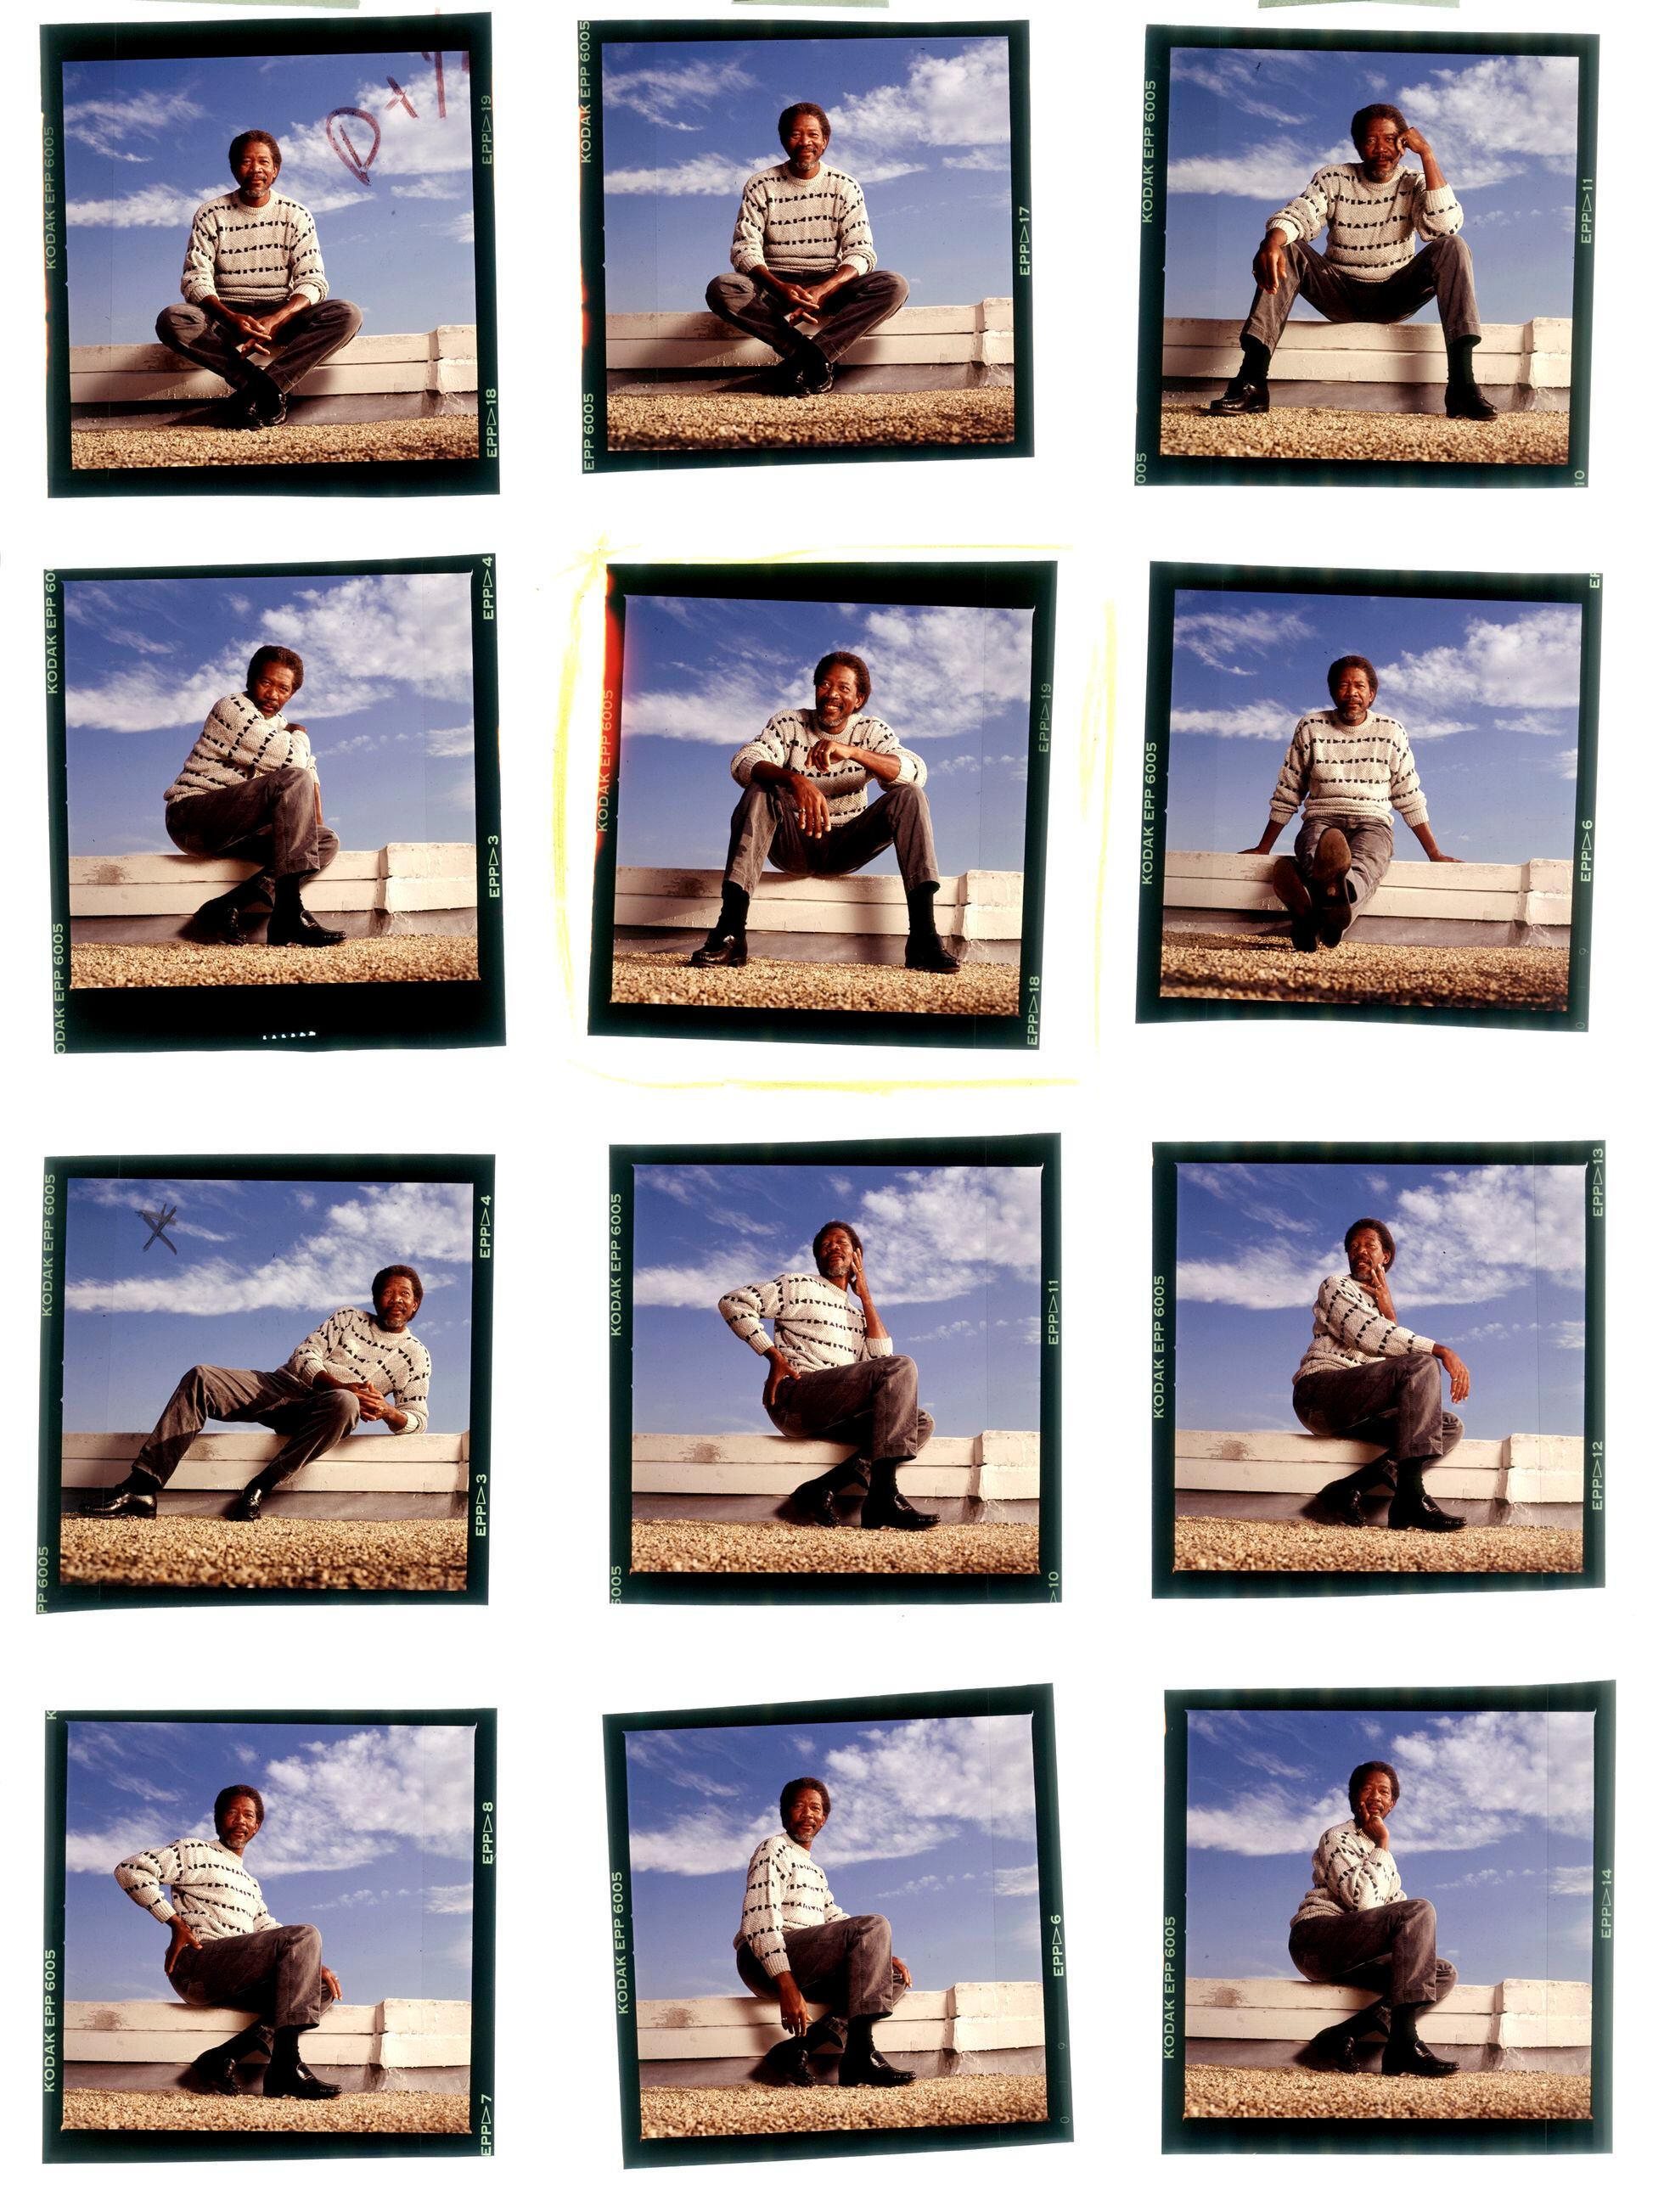 Morgan Freeman in 1990. BONNIE SCHIFFMAN PHOTOGRAPHY (GETTY IMAGES)